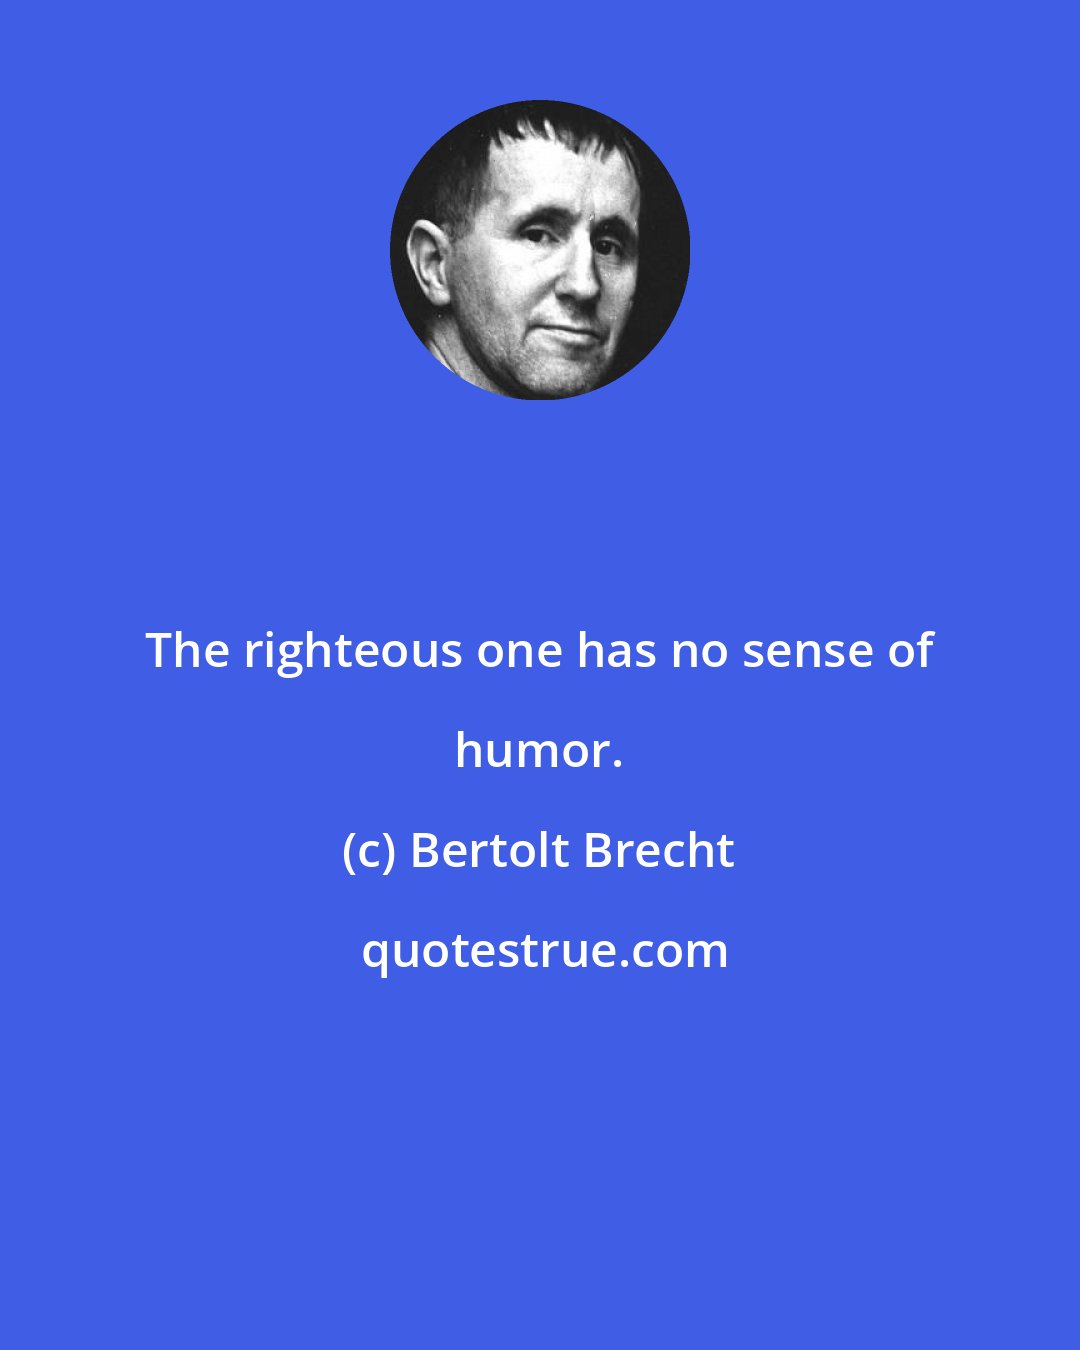 Bertolt Brecht: The righteous one has no sense of humor.